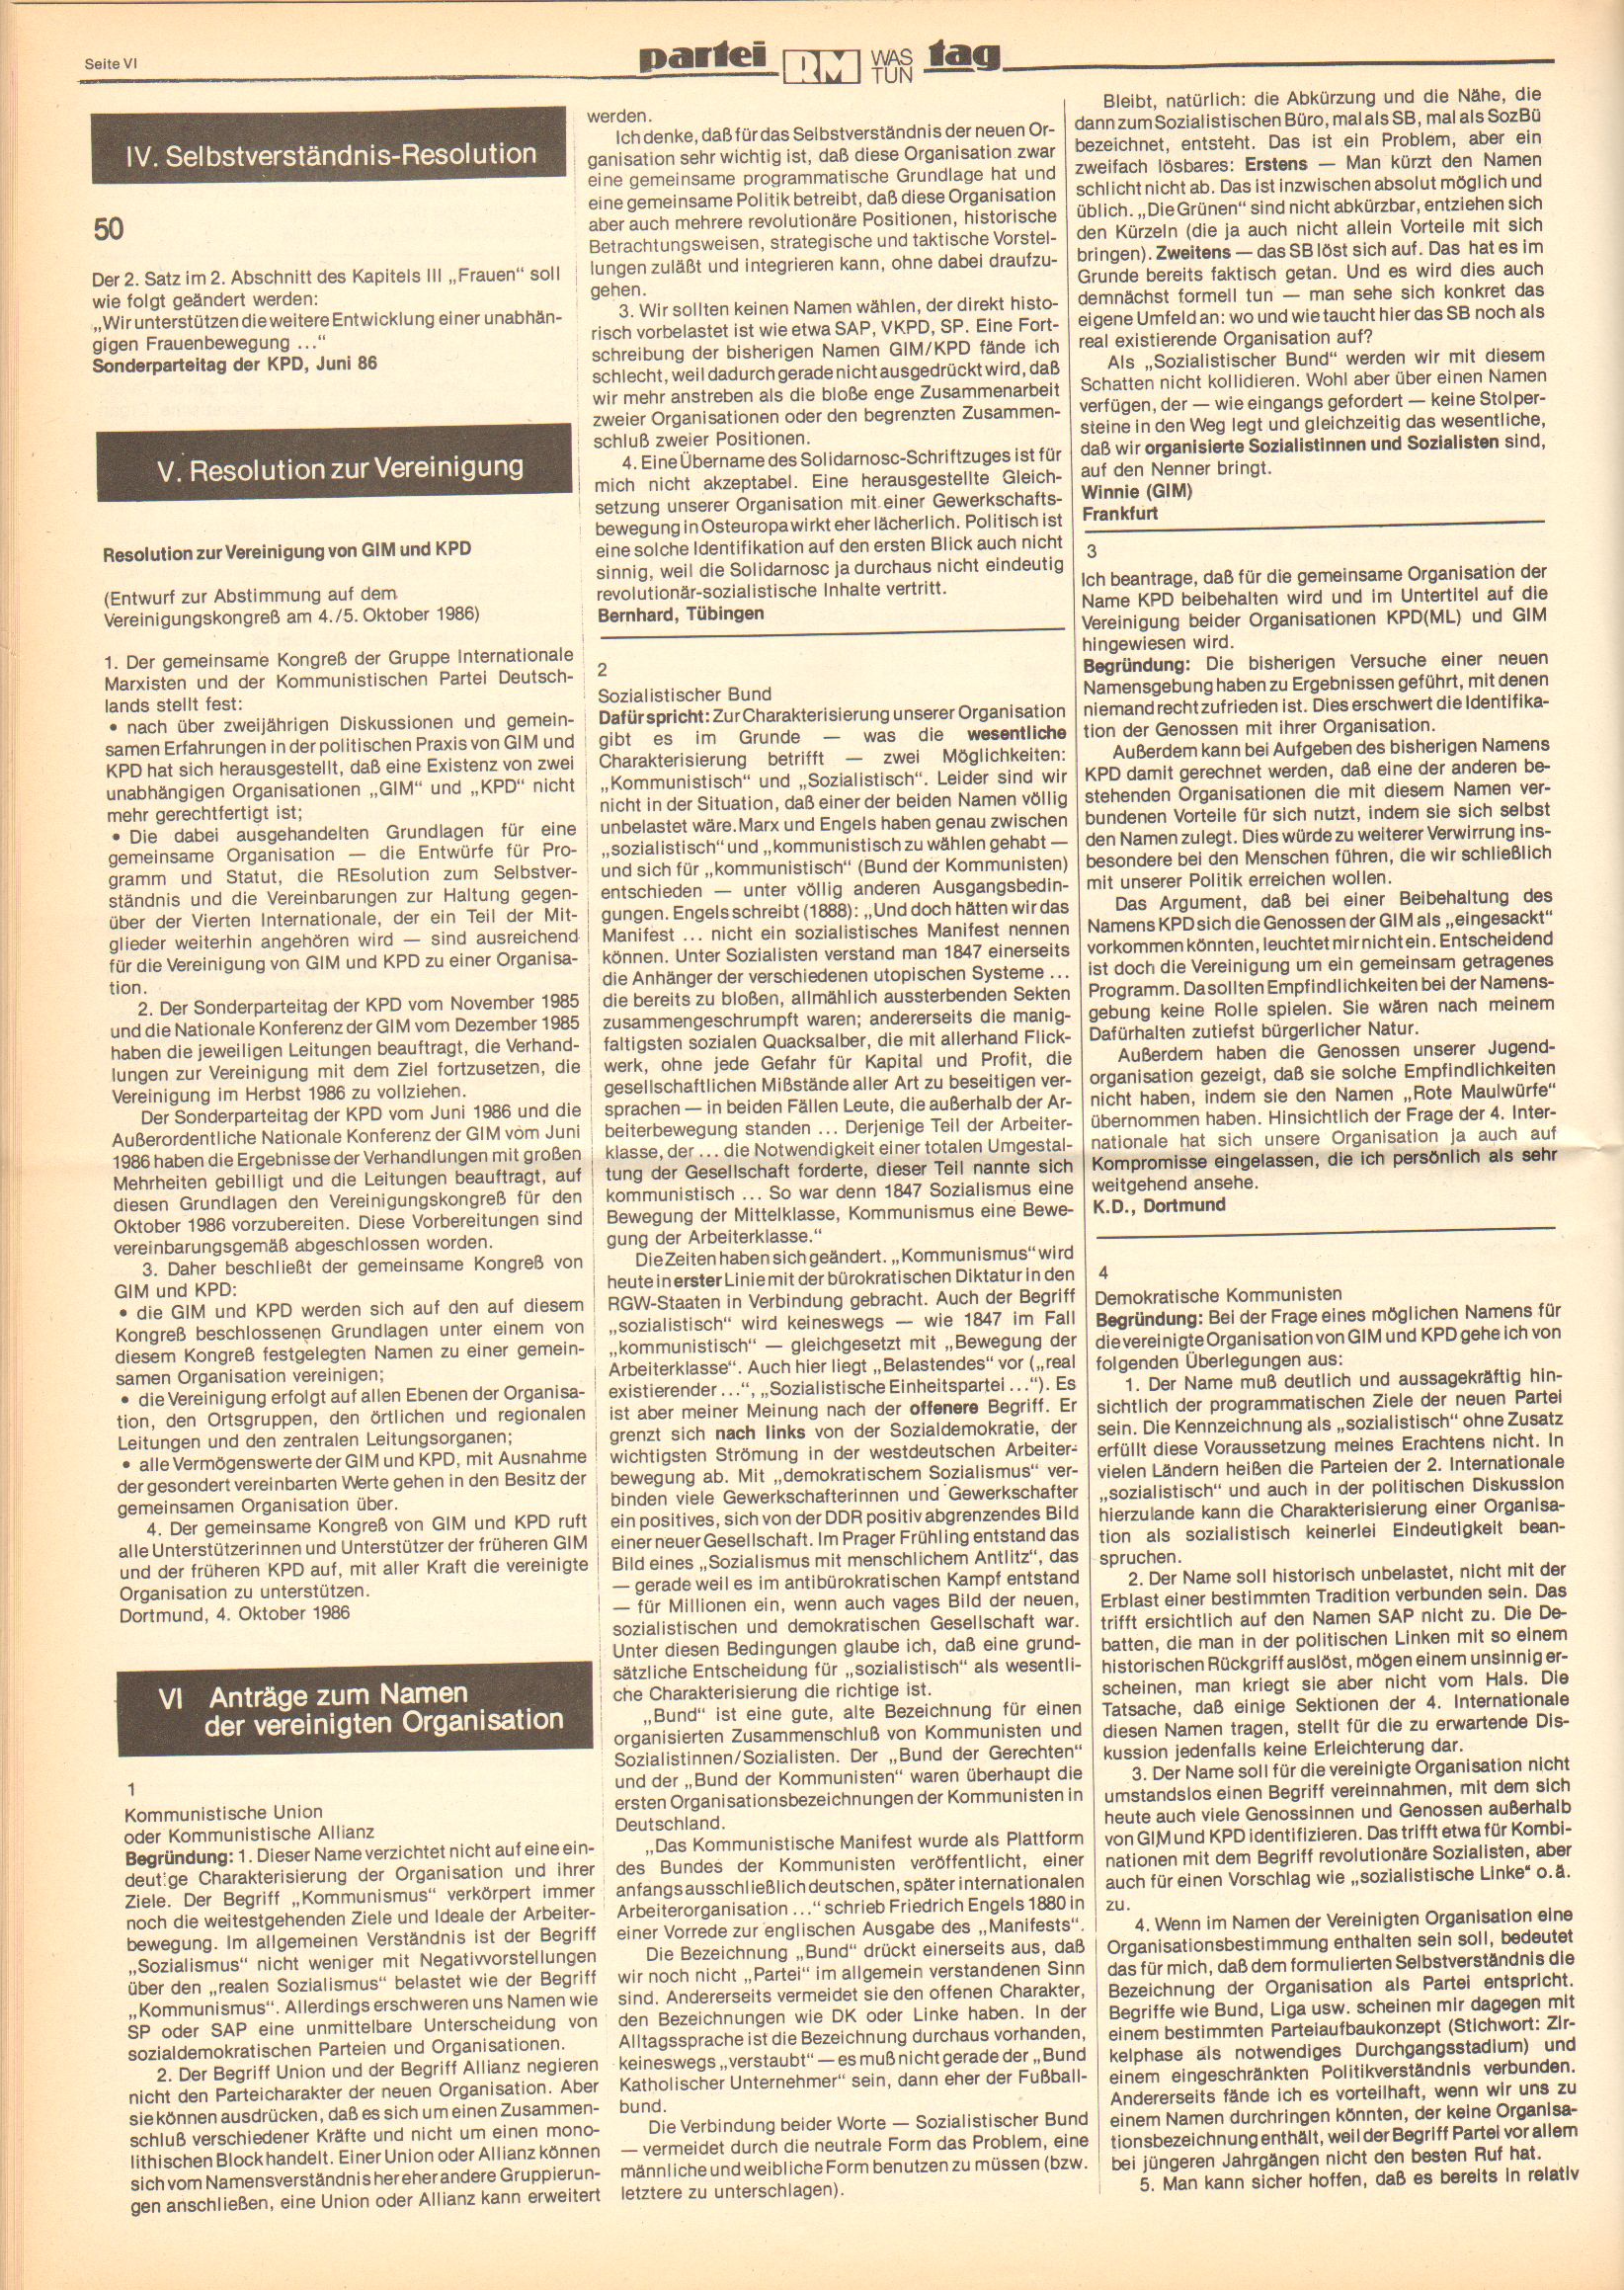 Roter Morgen, 20. Jg., 19. September 1986, Nr. 22, Seite 10